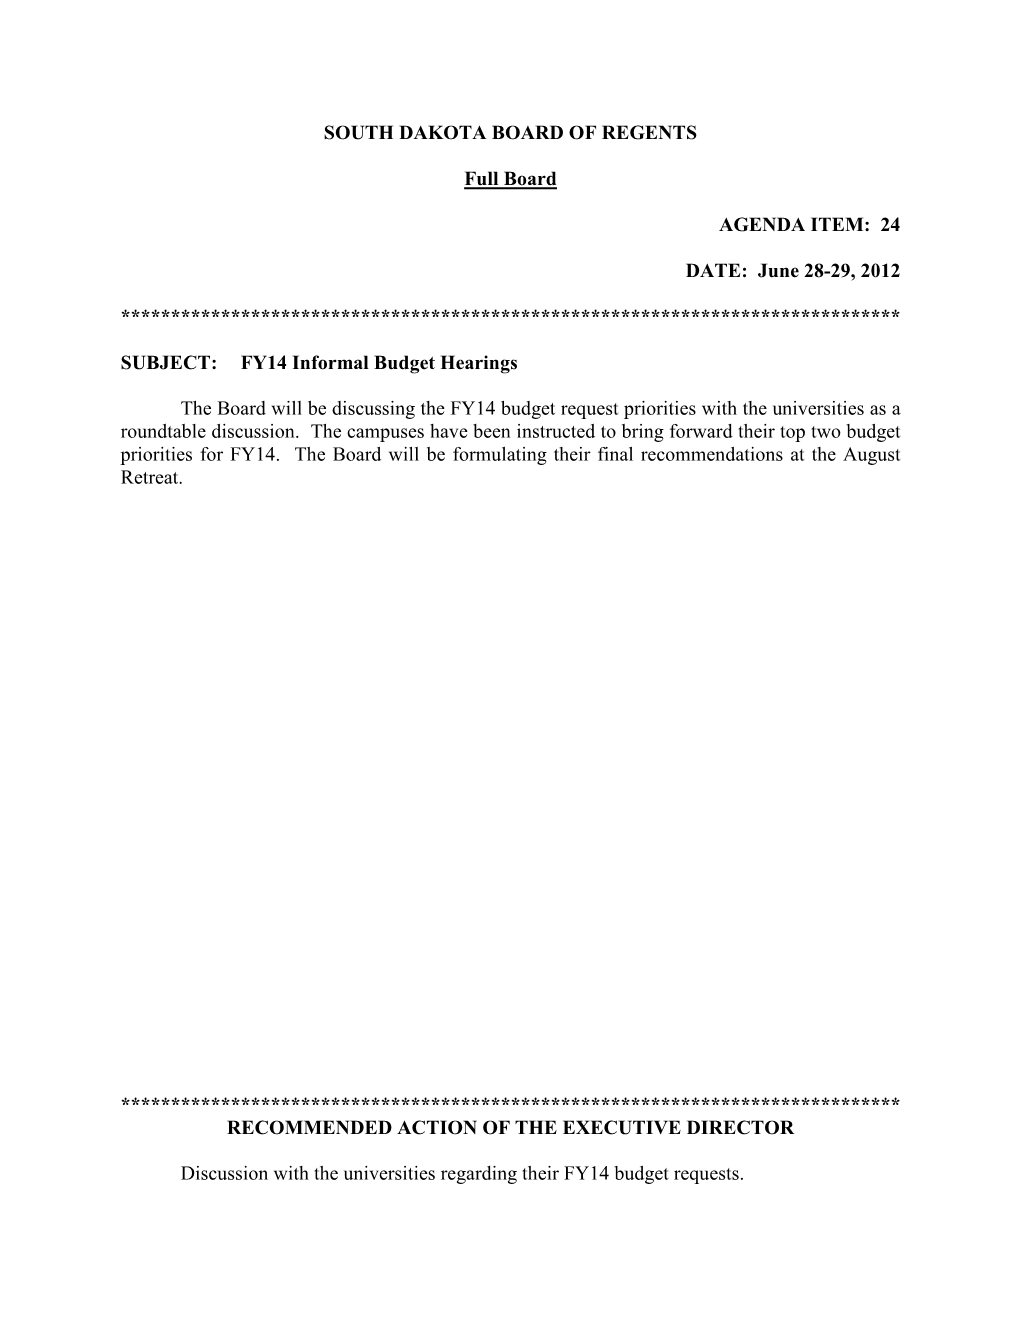 FY2014 Informal Budget Hearings Summary